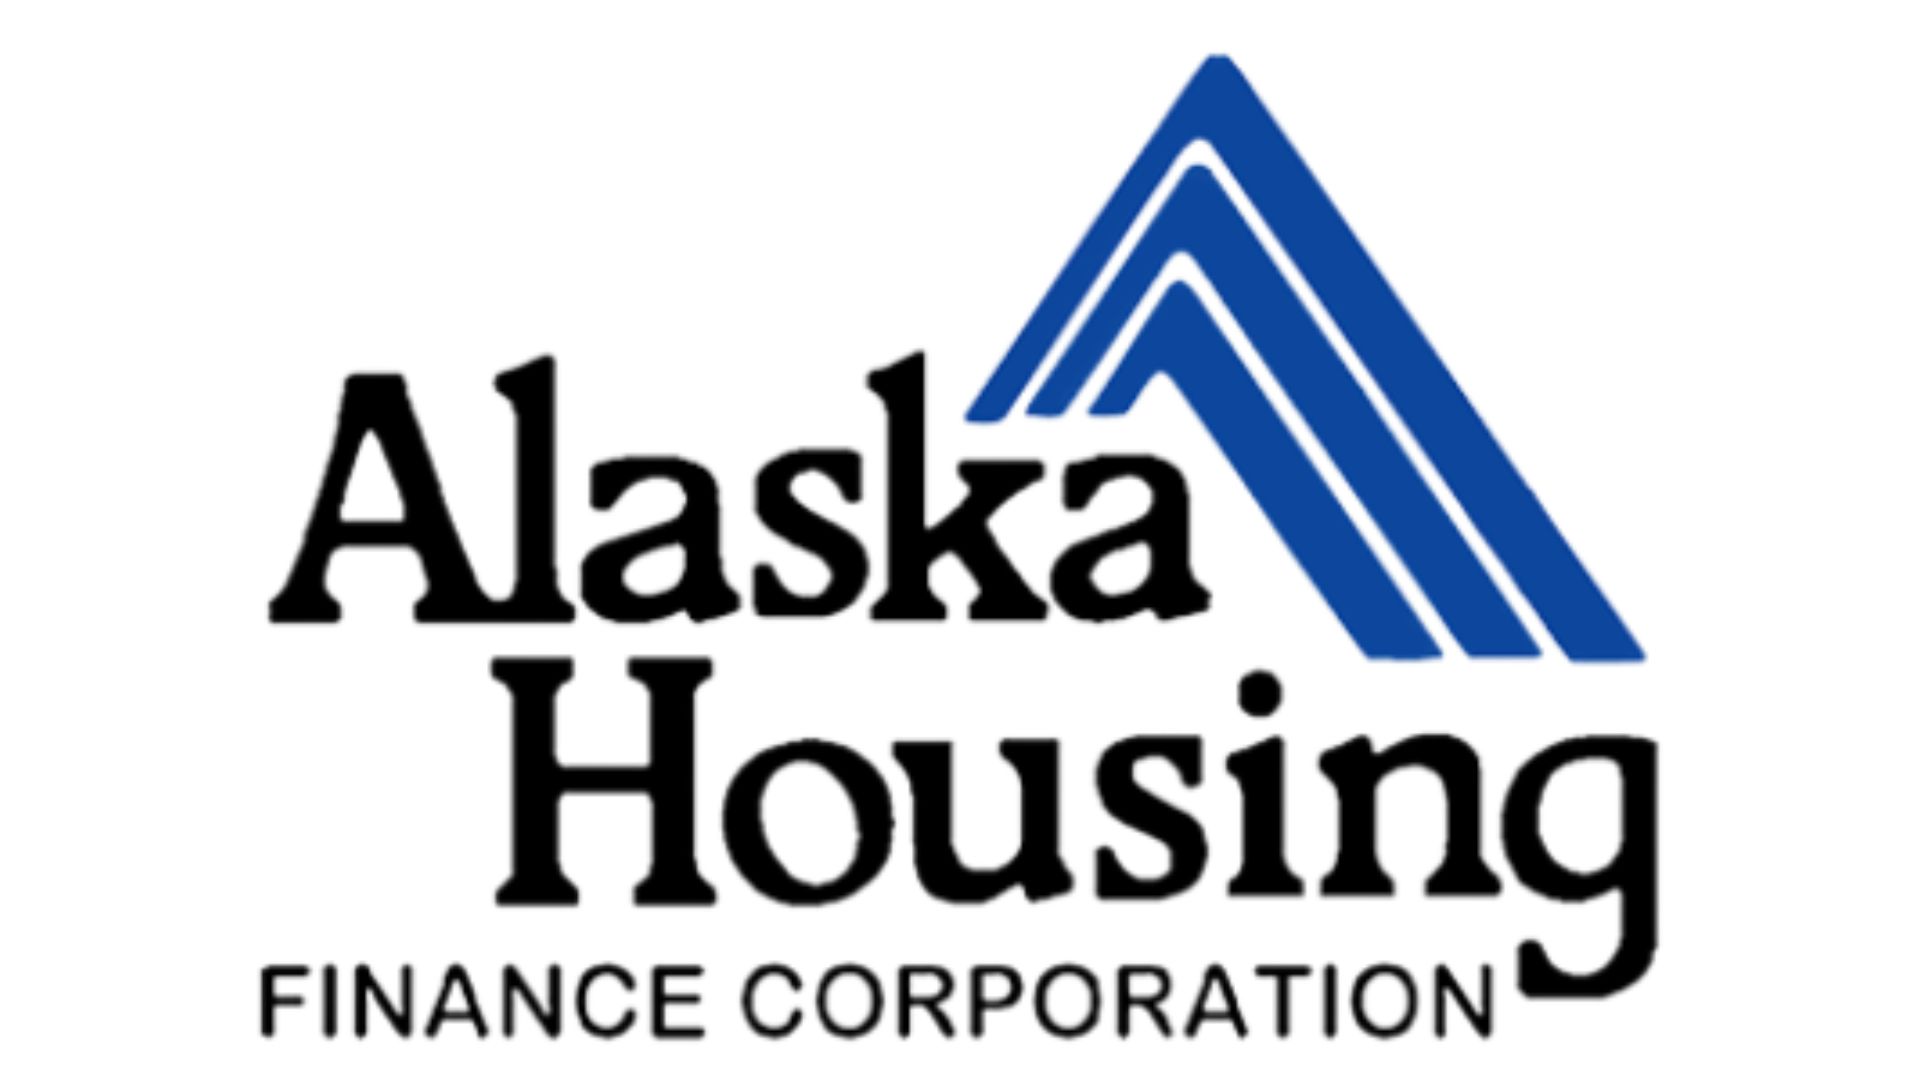 Alaska Housing Finance Corporation.